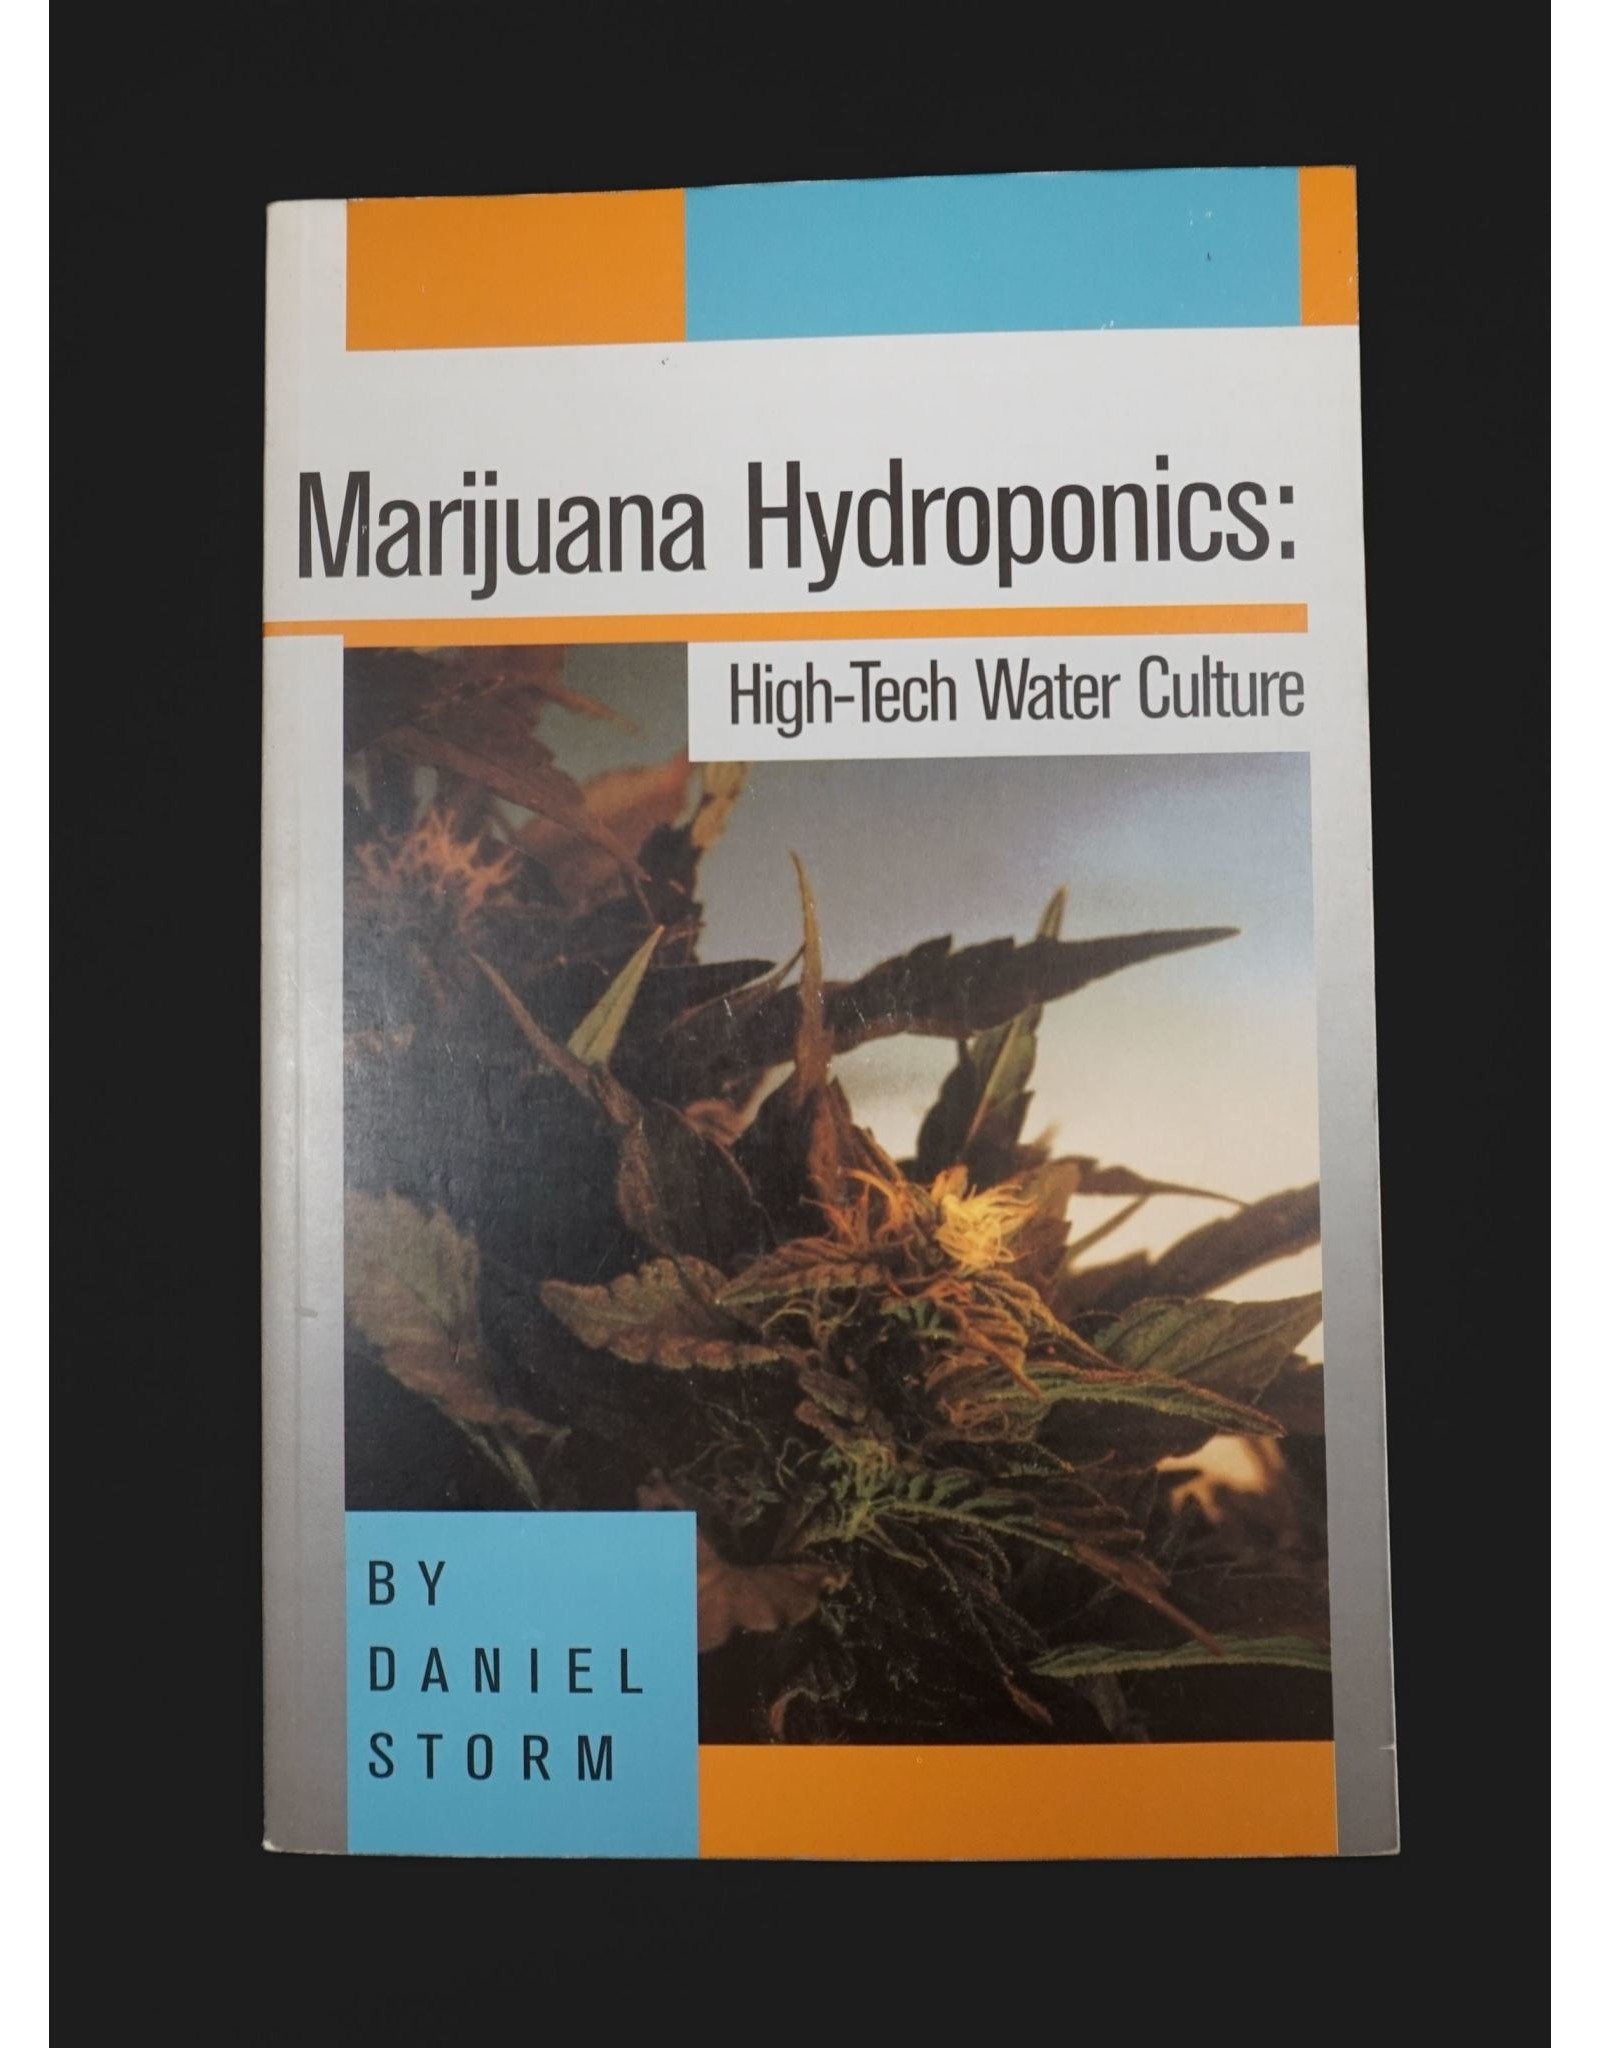 Marijuana Hydroponics: High-Tech Water Culture